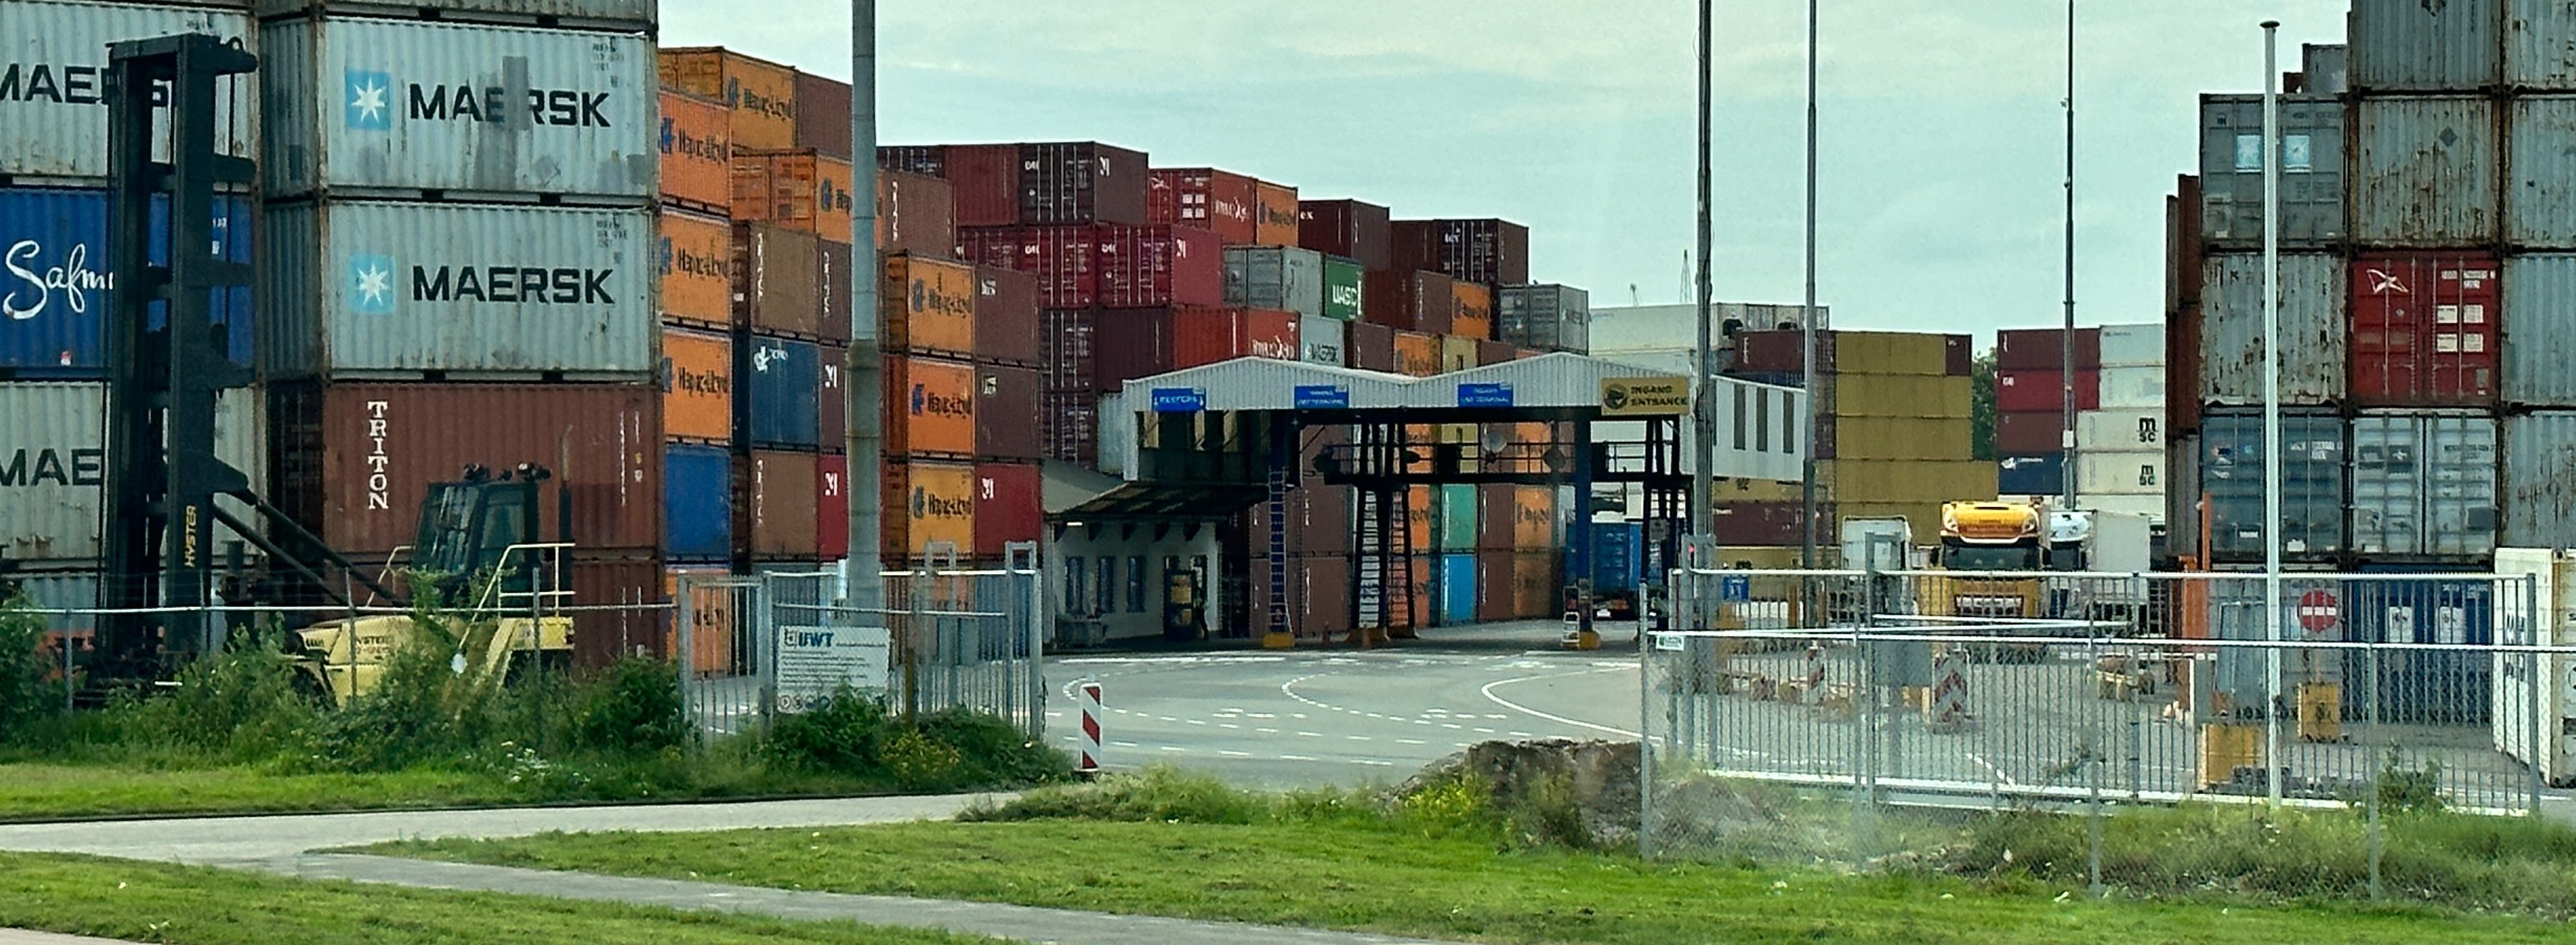 UWT Depot Waalhaven (WHT)